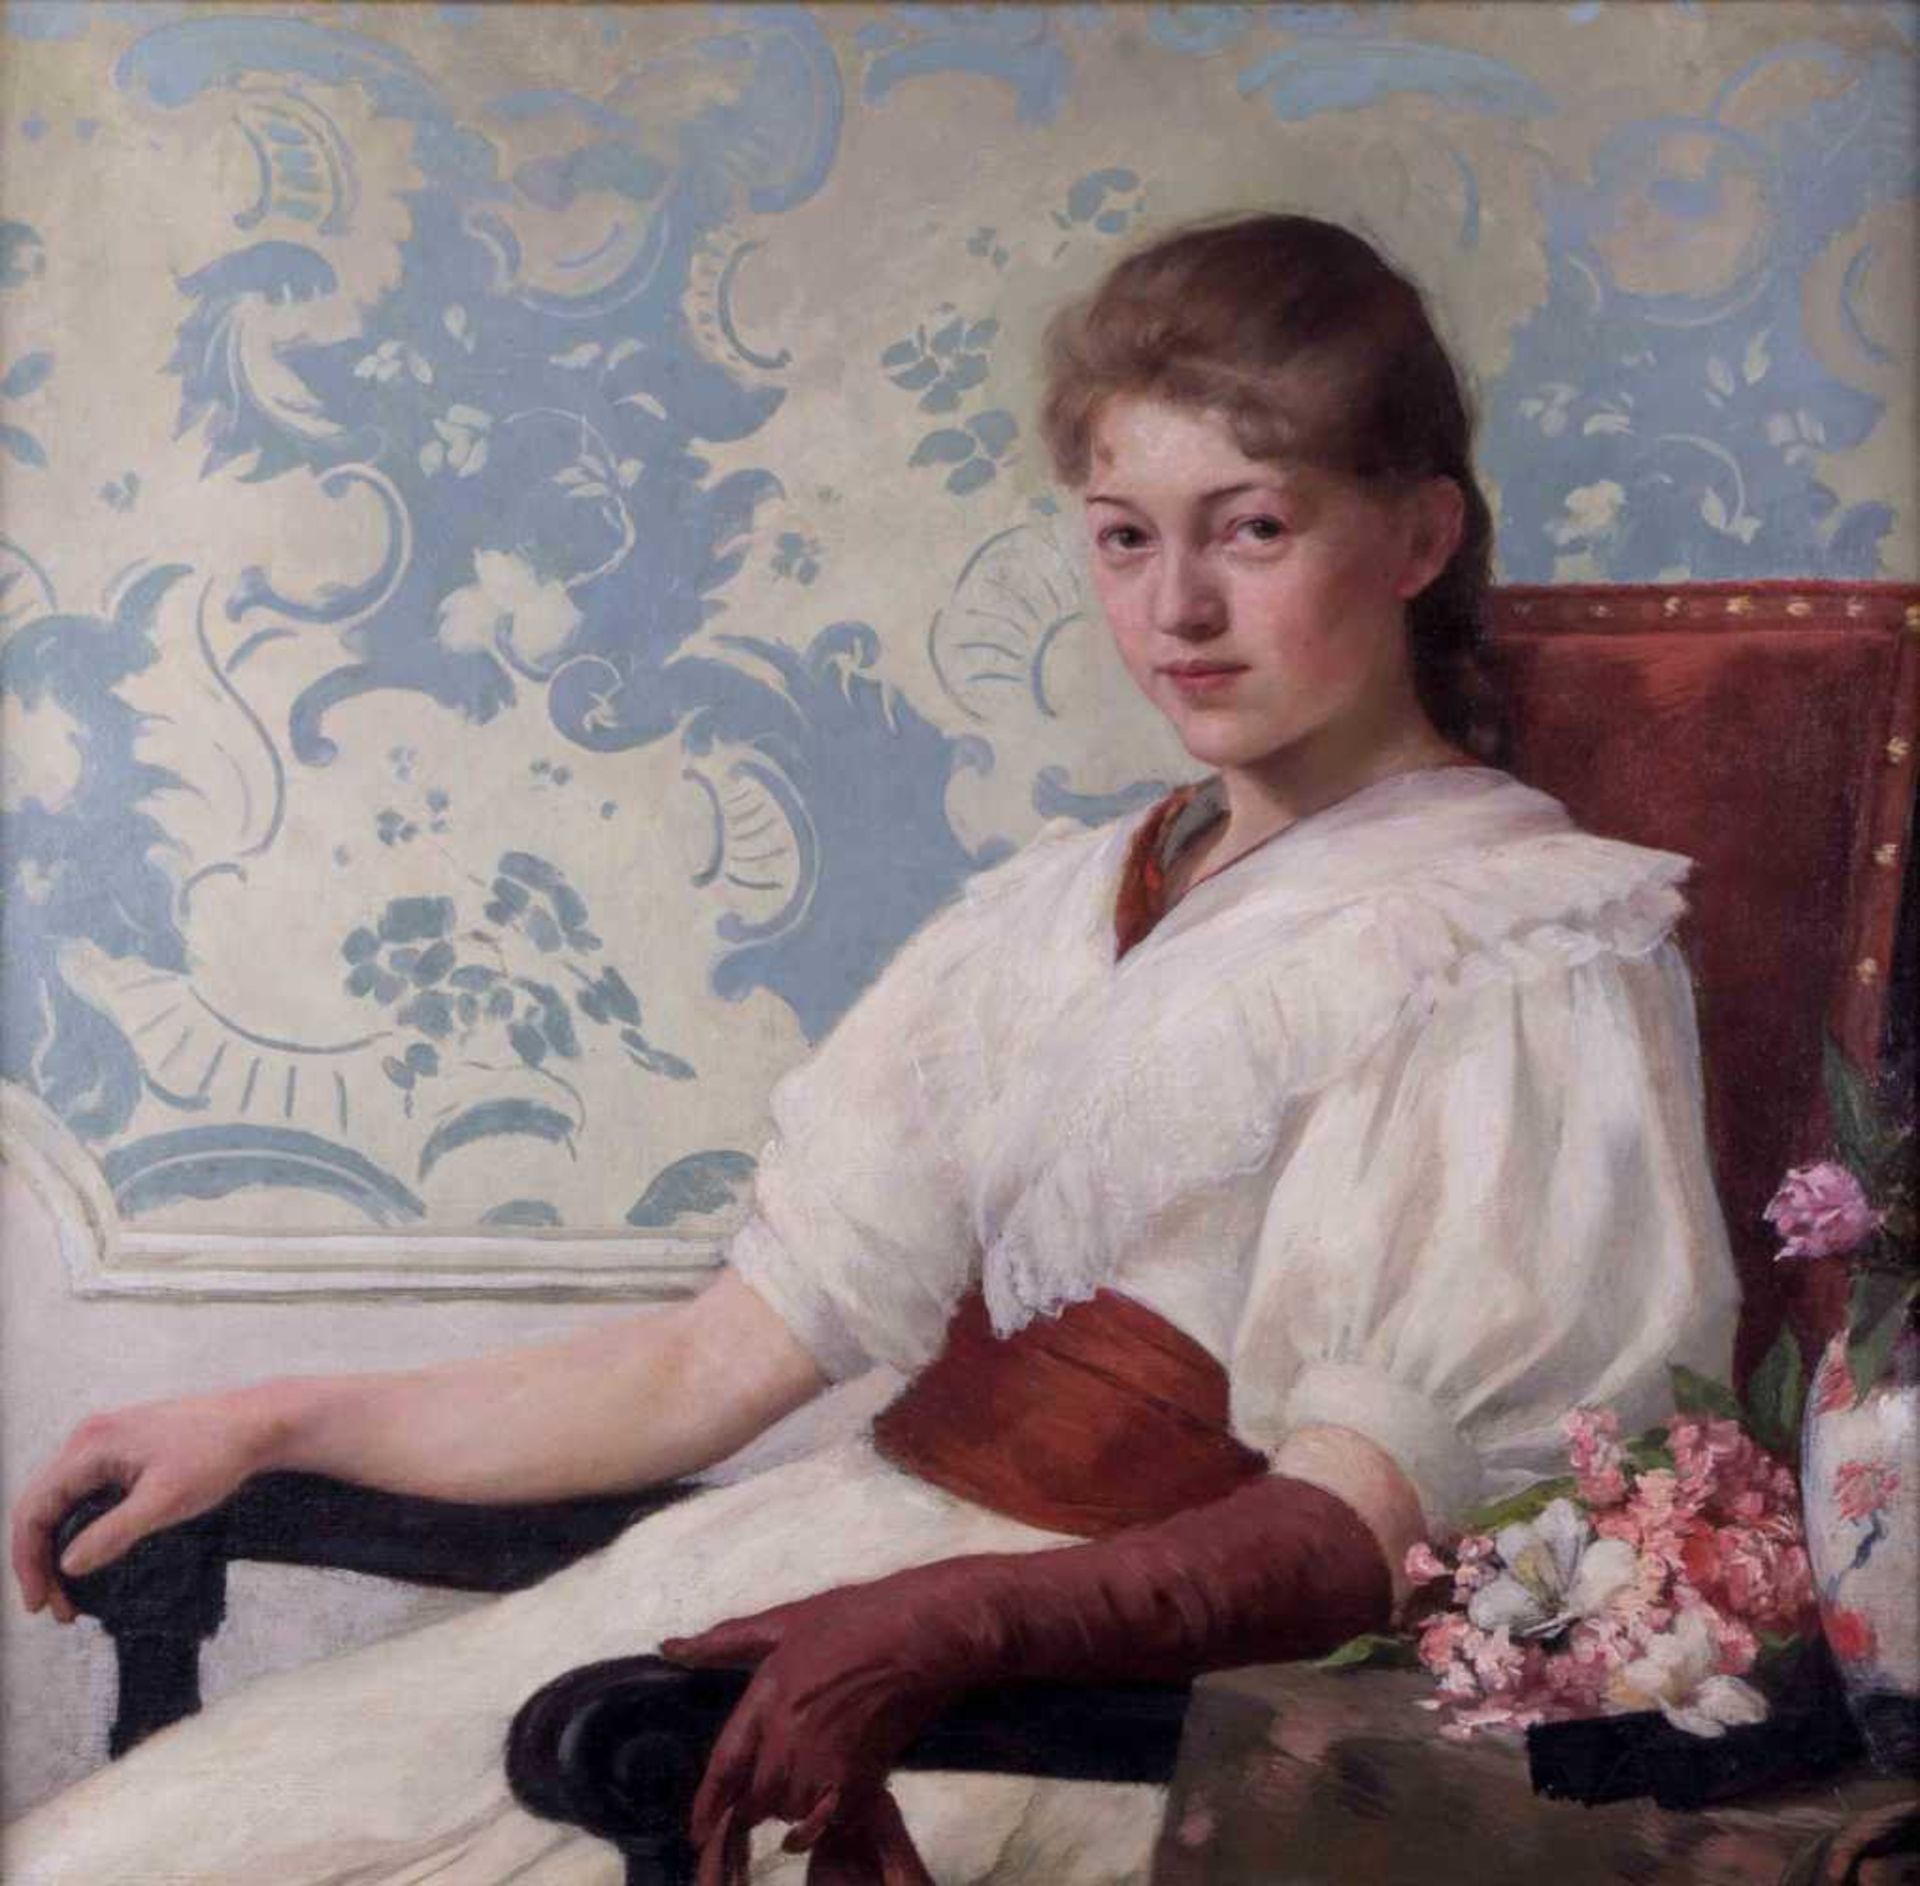 Fritz BURGER (1867-?) "Sitzendes Mädchen" Gemälde Öl/Leinwand, 85 cm x 85 cm, rückseitig auf